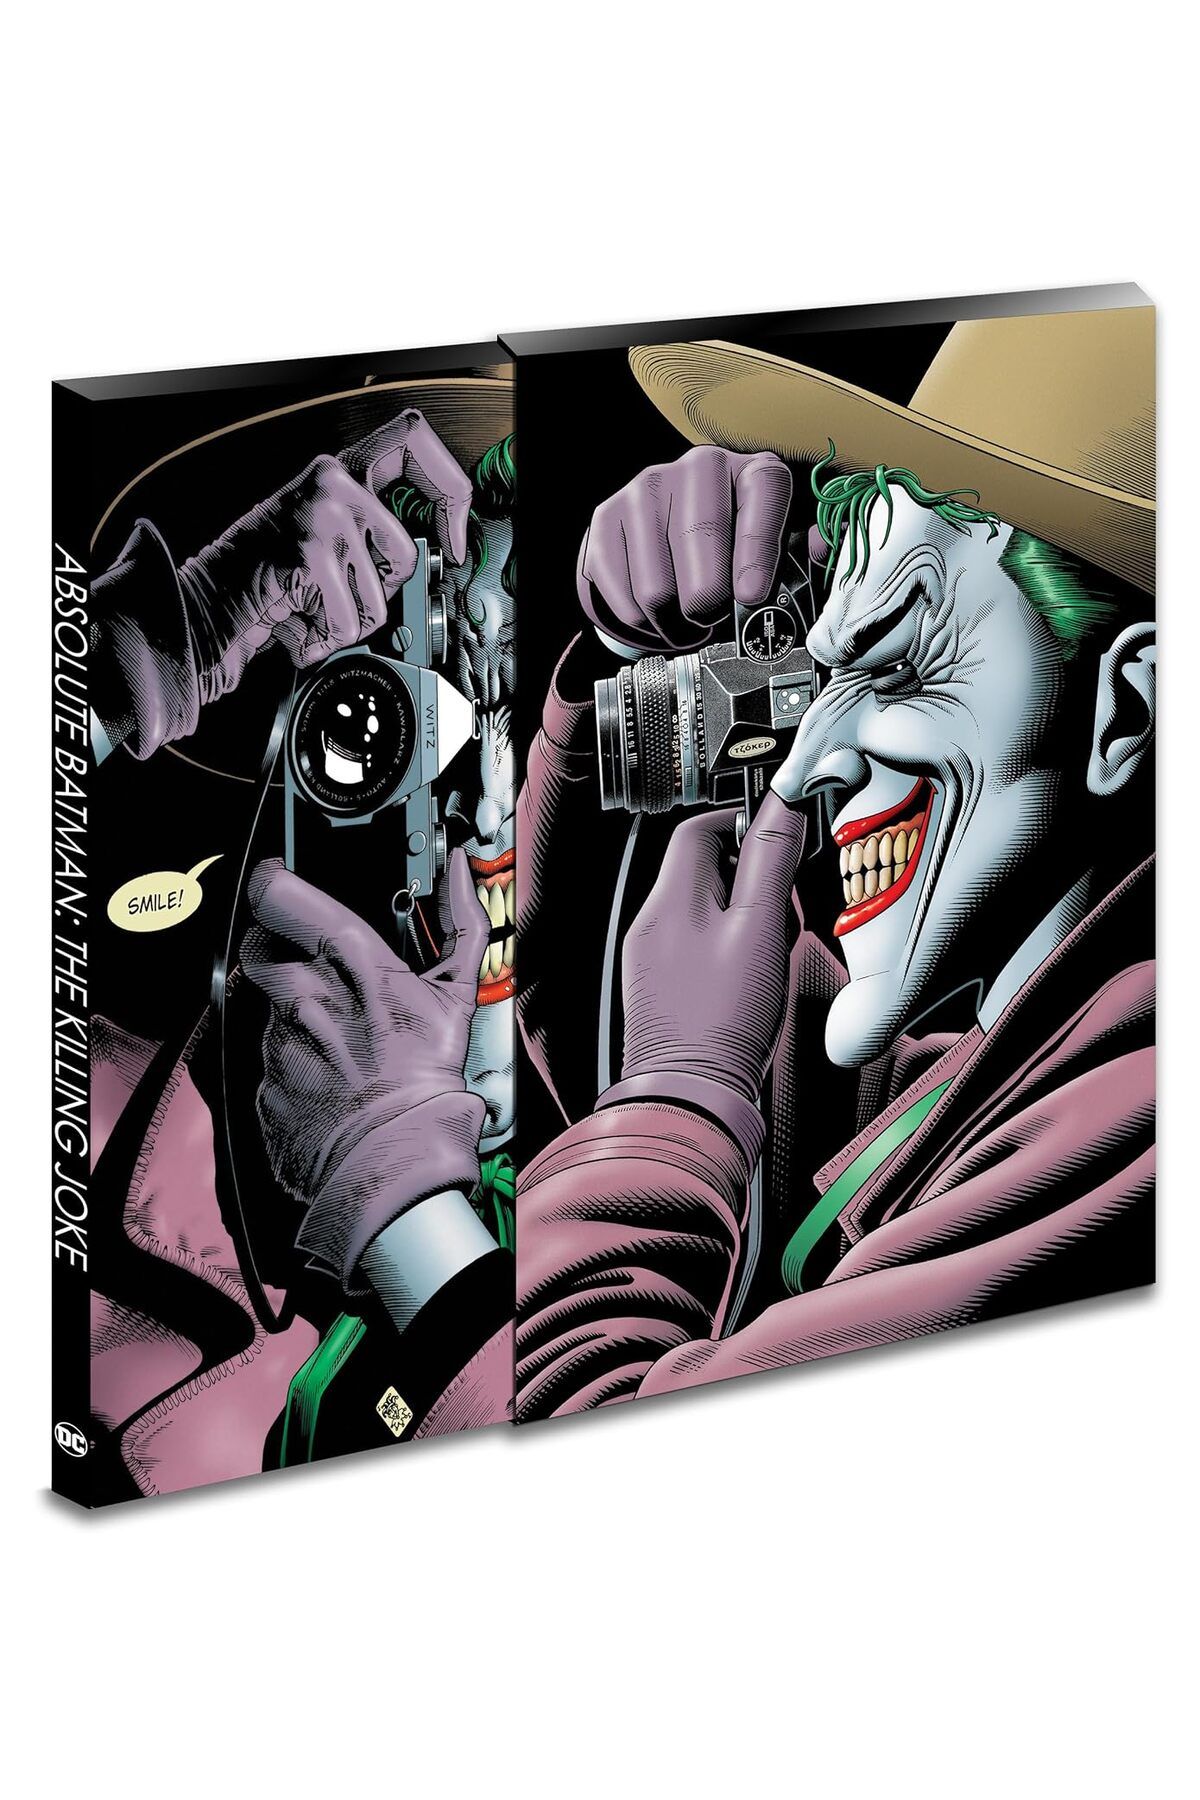 MARVEL Absolute Batman: The Killing Joke / 30th Anniversary Edition - Alan Moore